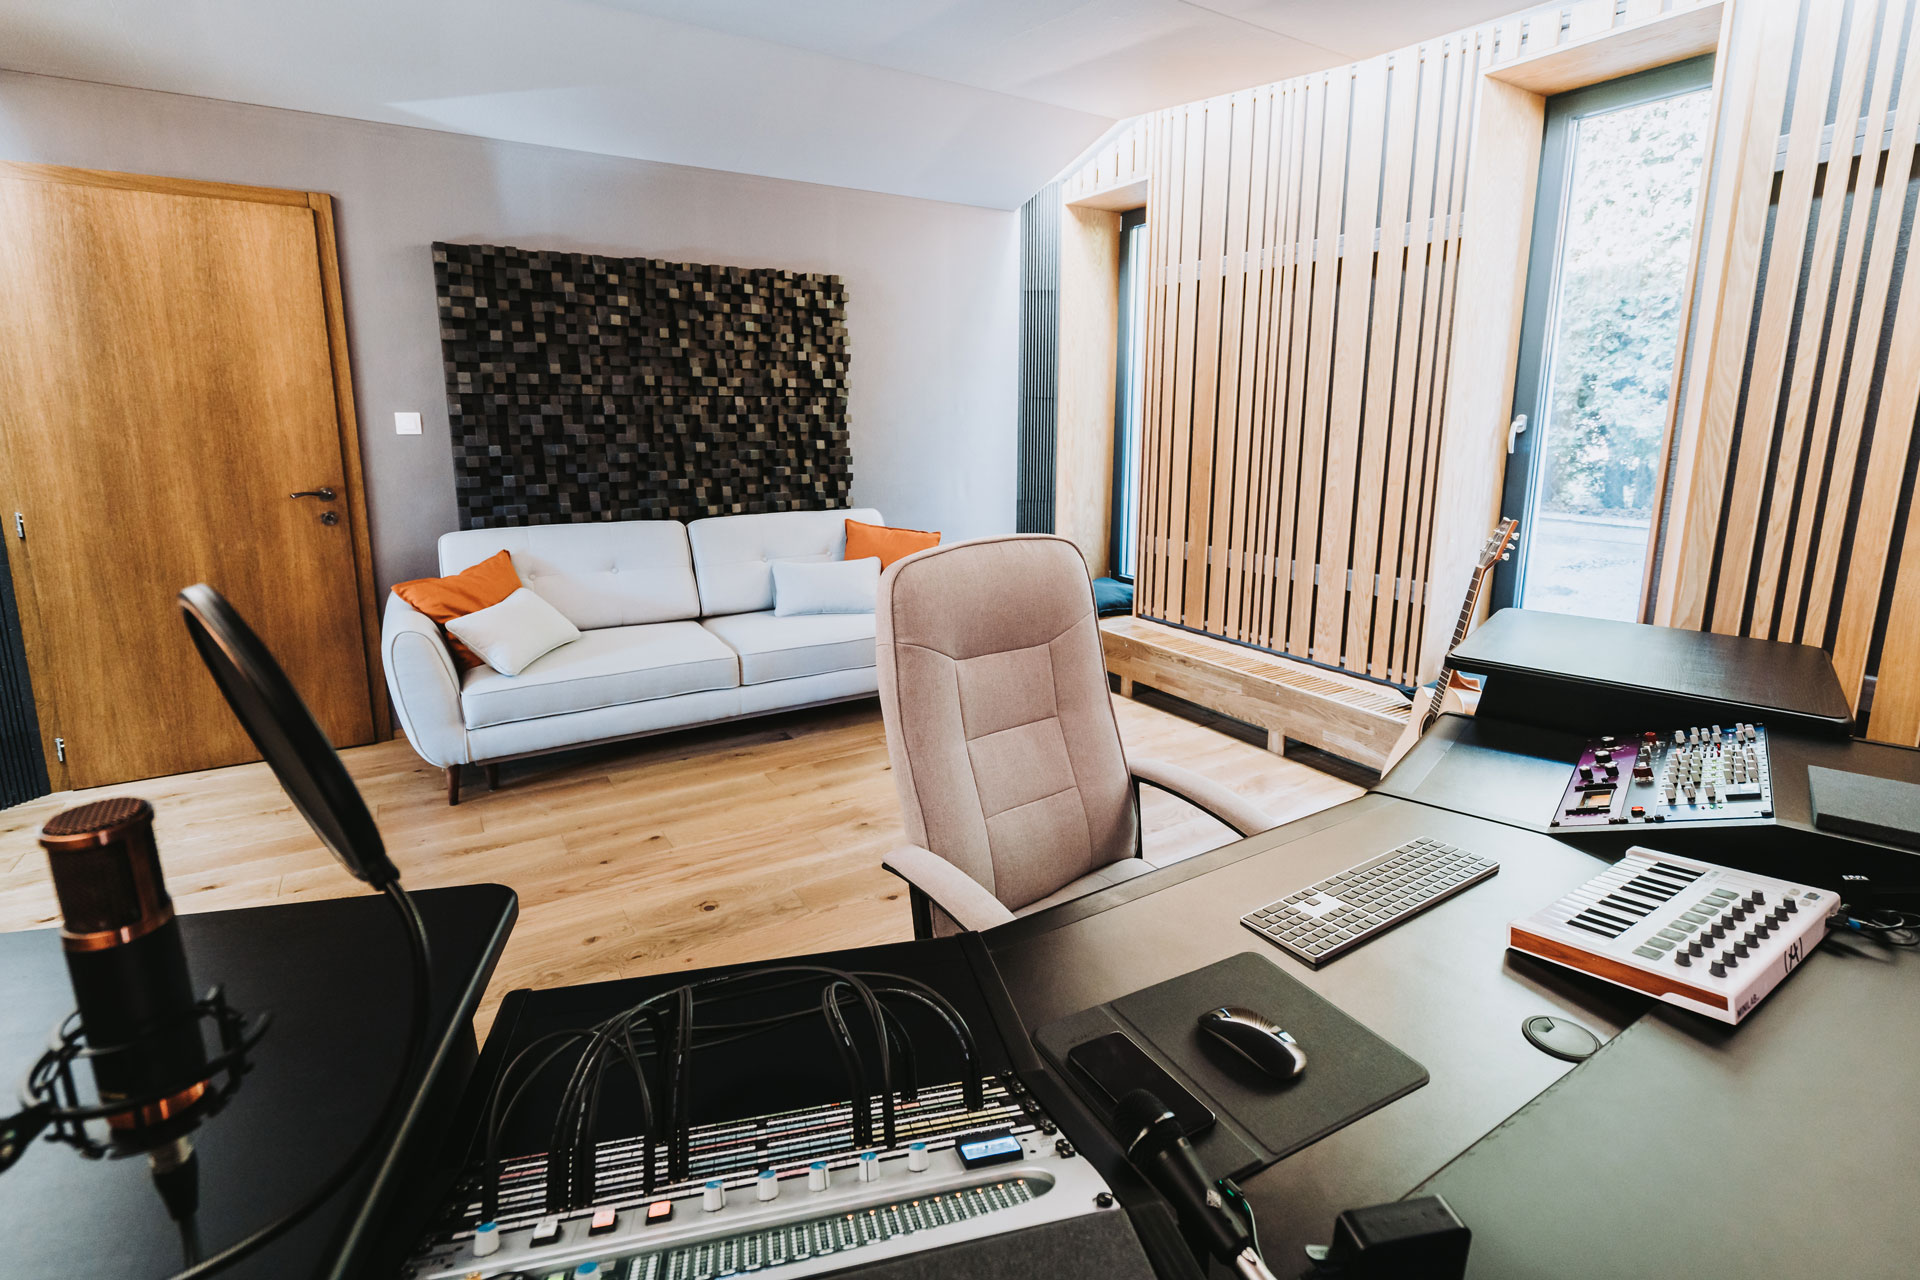 Control room in a music recording studio